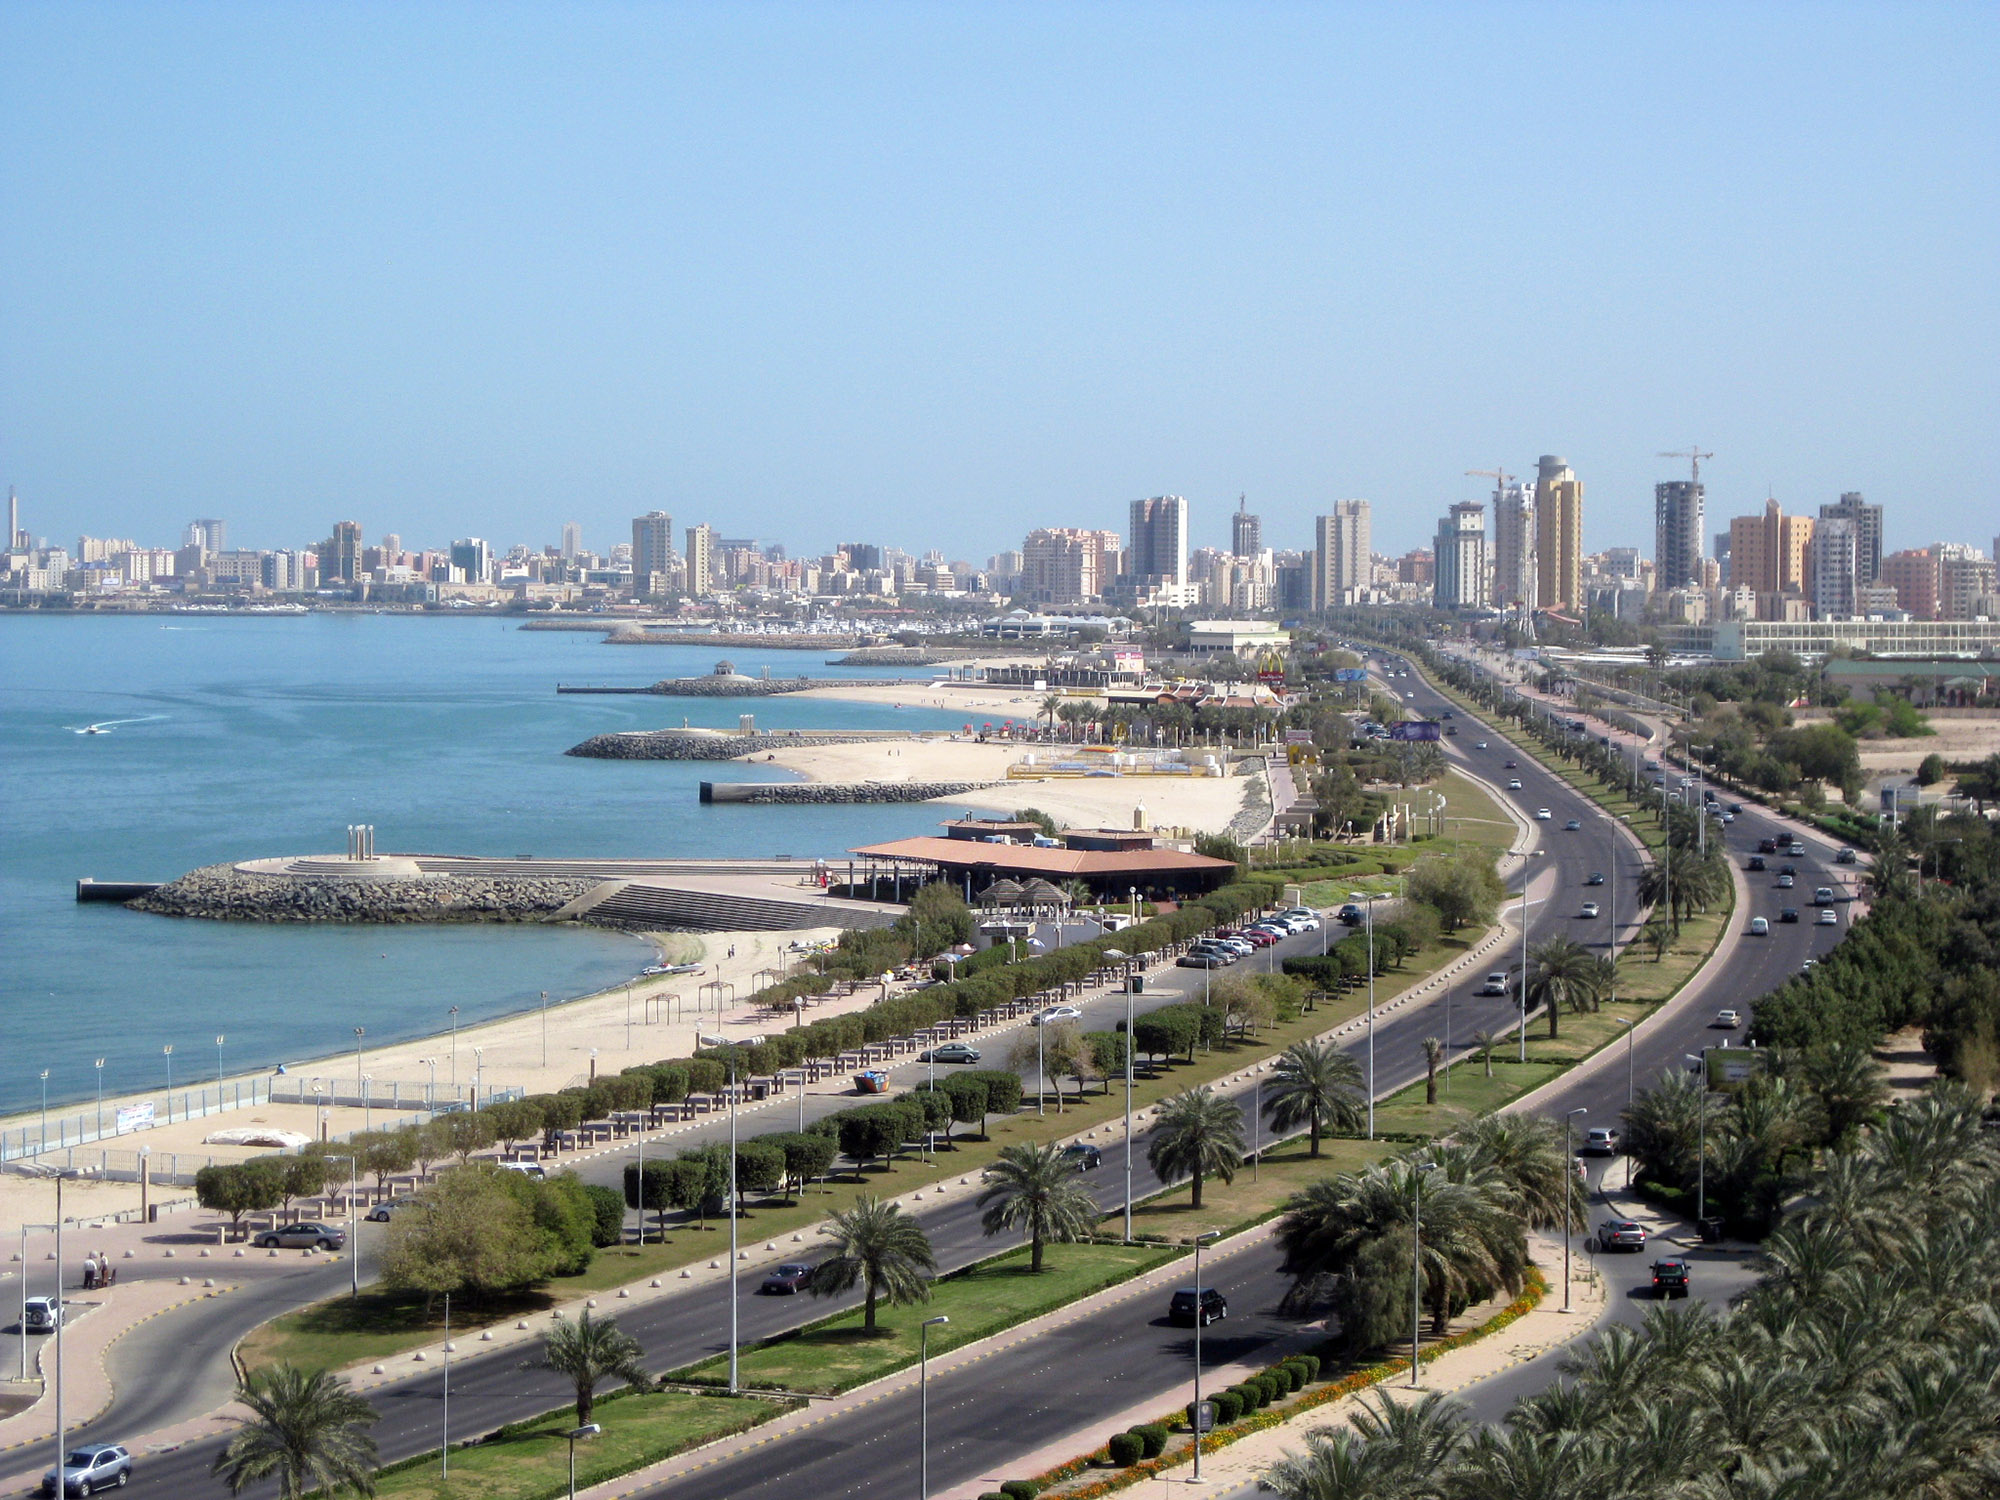 Kuwait City Urban Development 2030